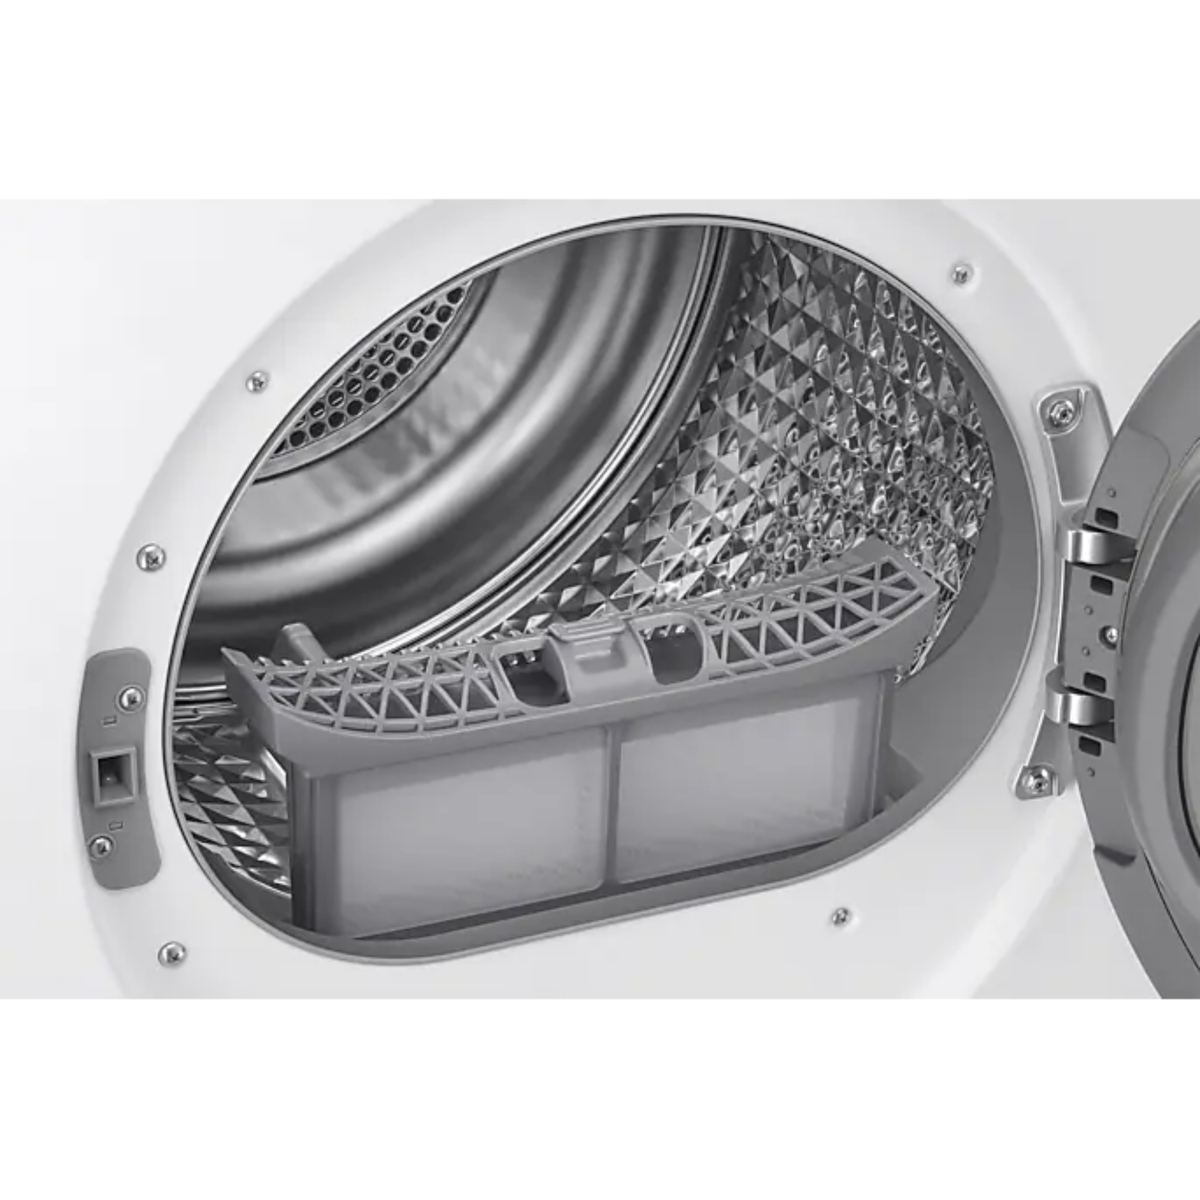 Samsung Dryer with BESPOKE Smart Heat Pump Dryer with AI Dry, 9 kg, White, DV90BB9440GHGU